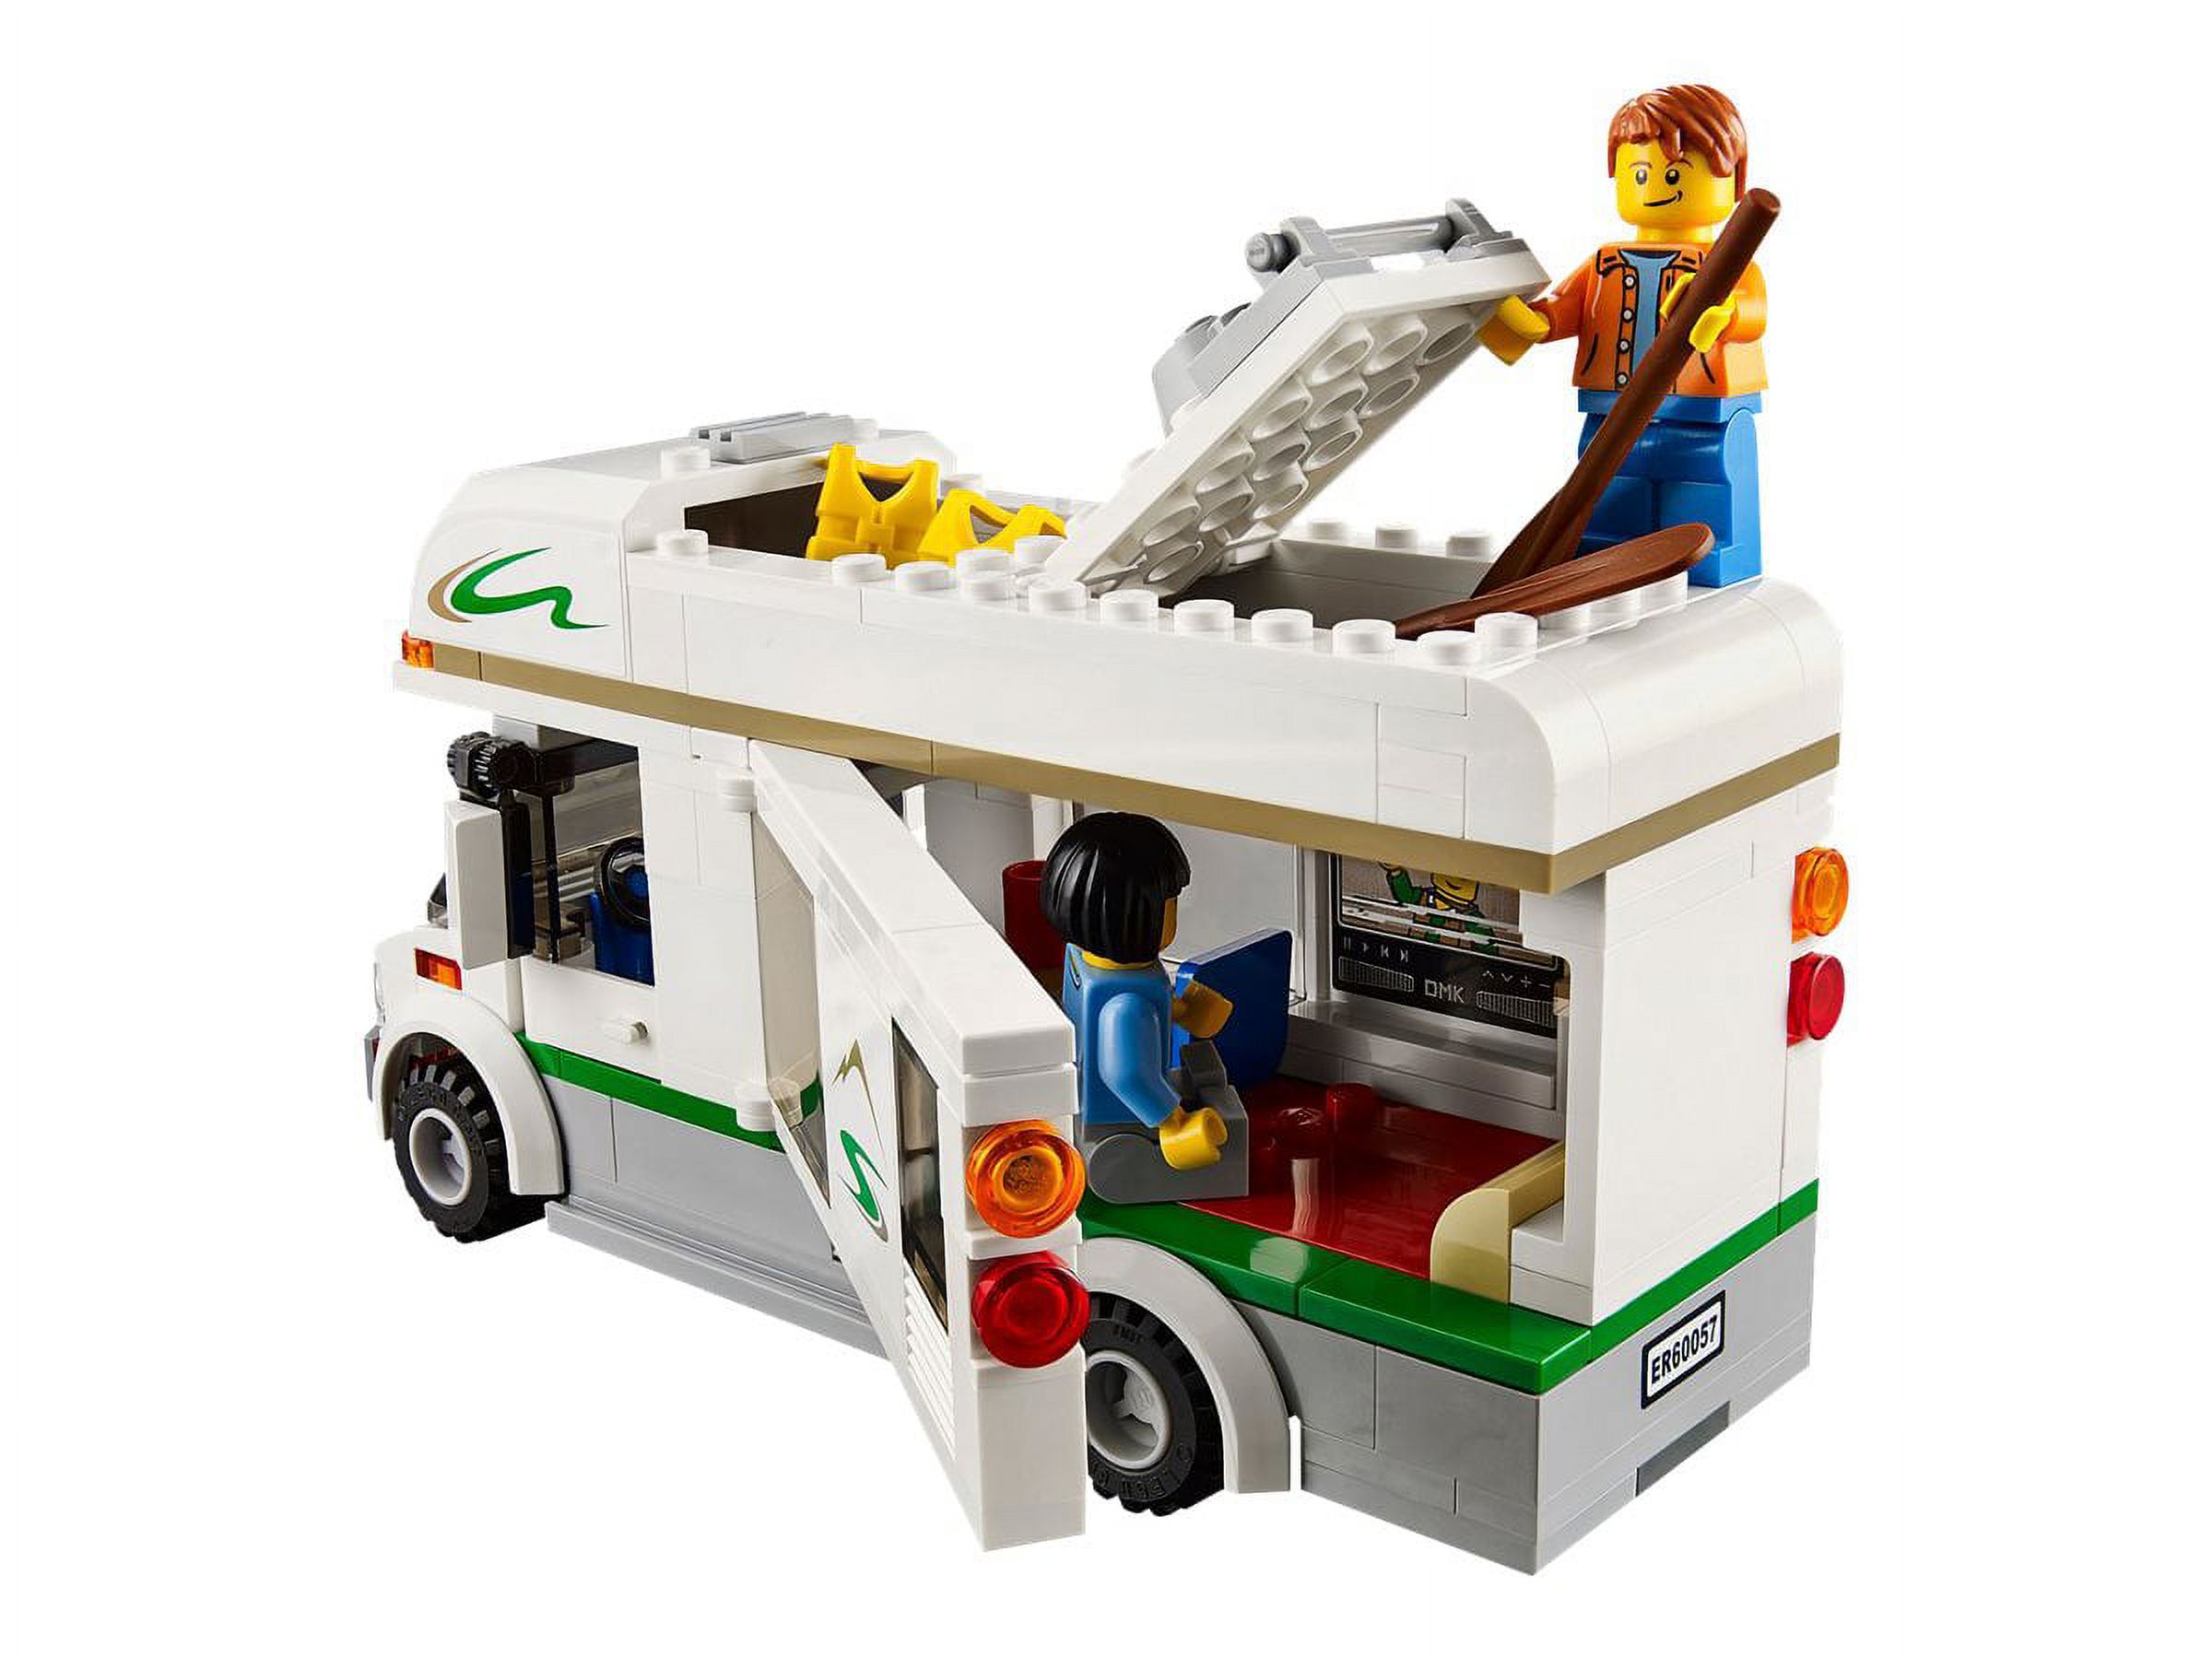 LEGO City Great Vehicles Camper Van Building Set - image 2 of 7